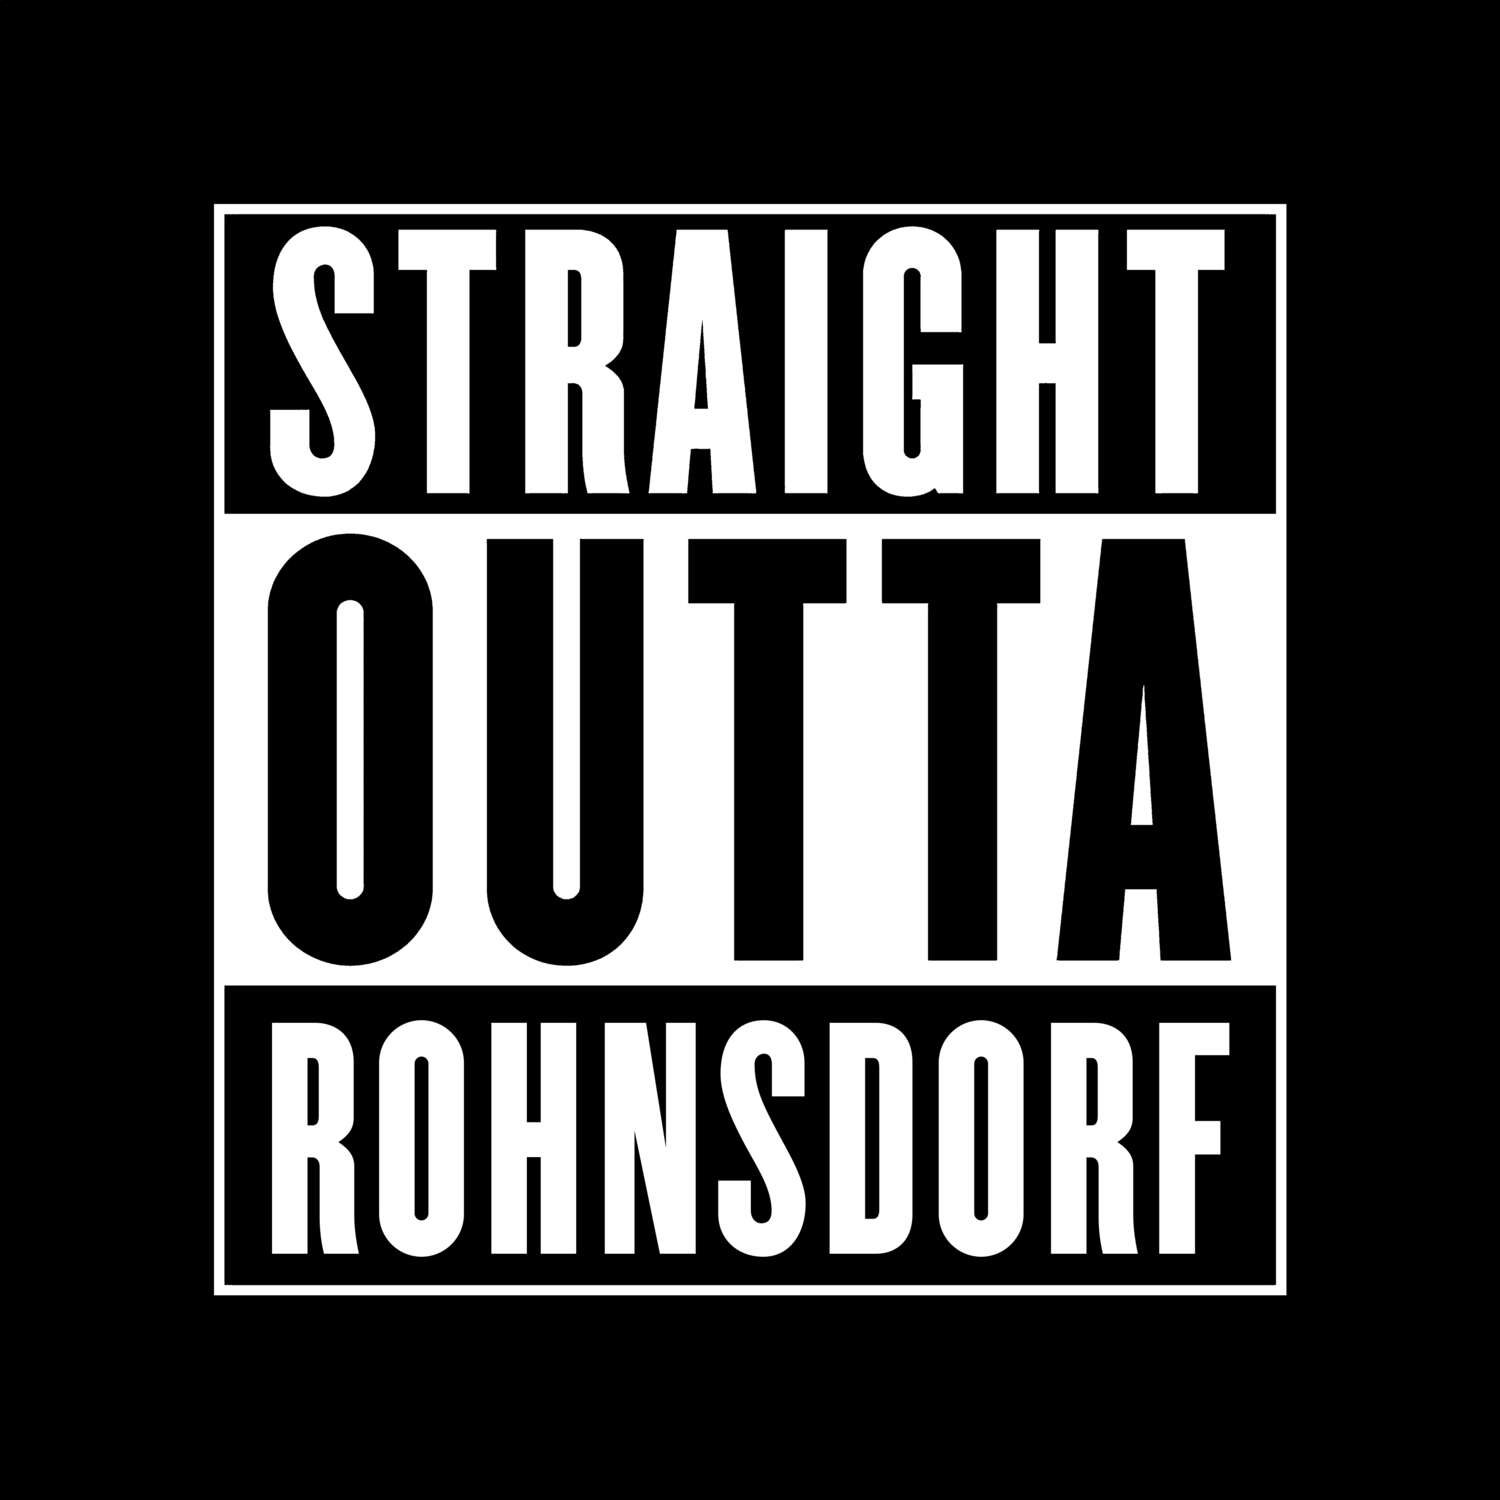 Rohnsdorf T-Shirt »Straight Outta«